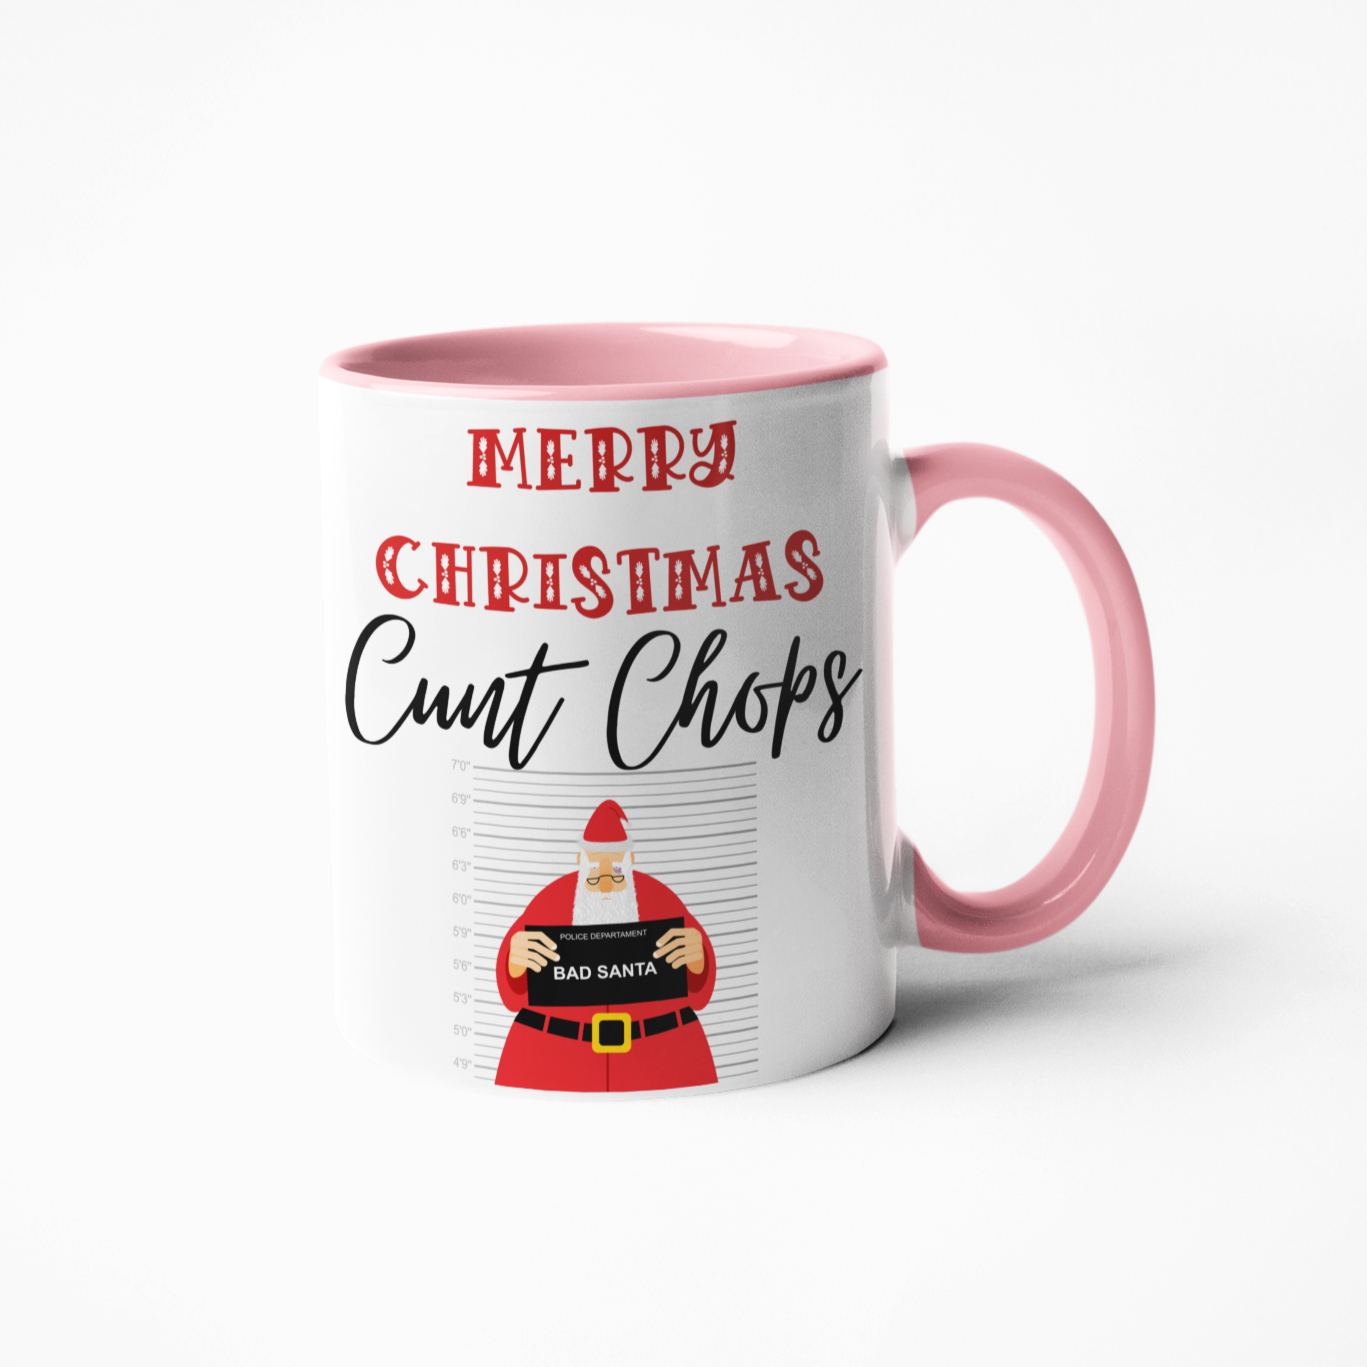 Merry Christmas cunt chops pink mug